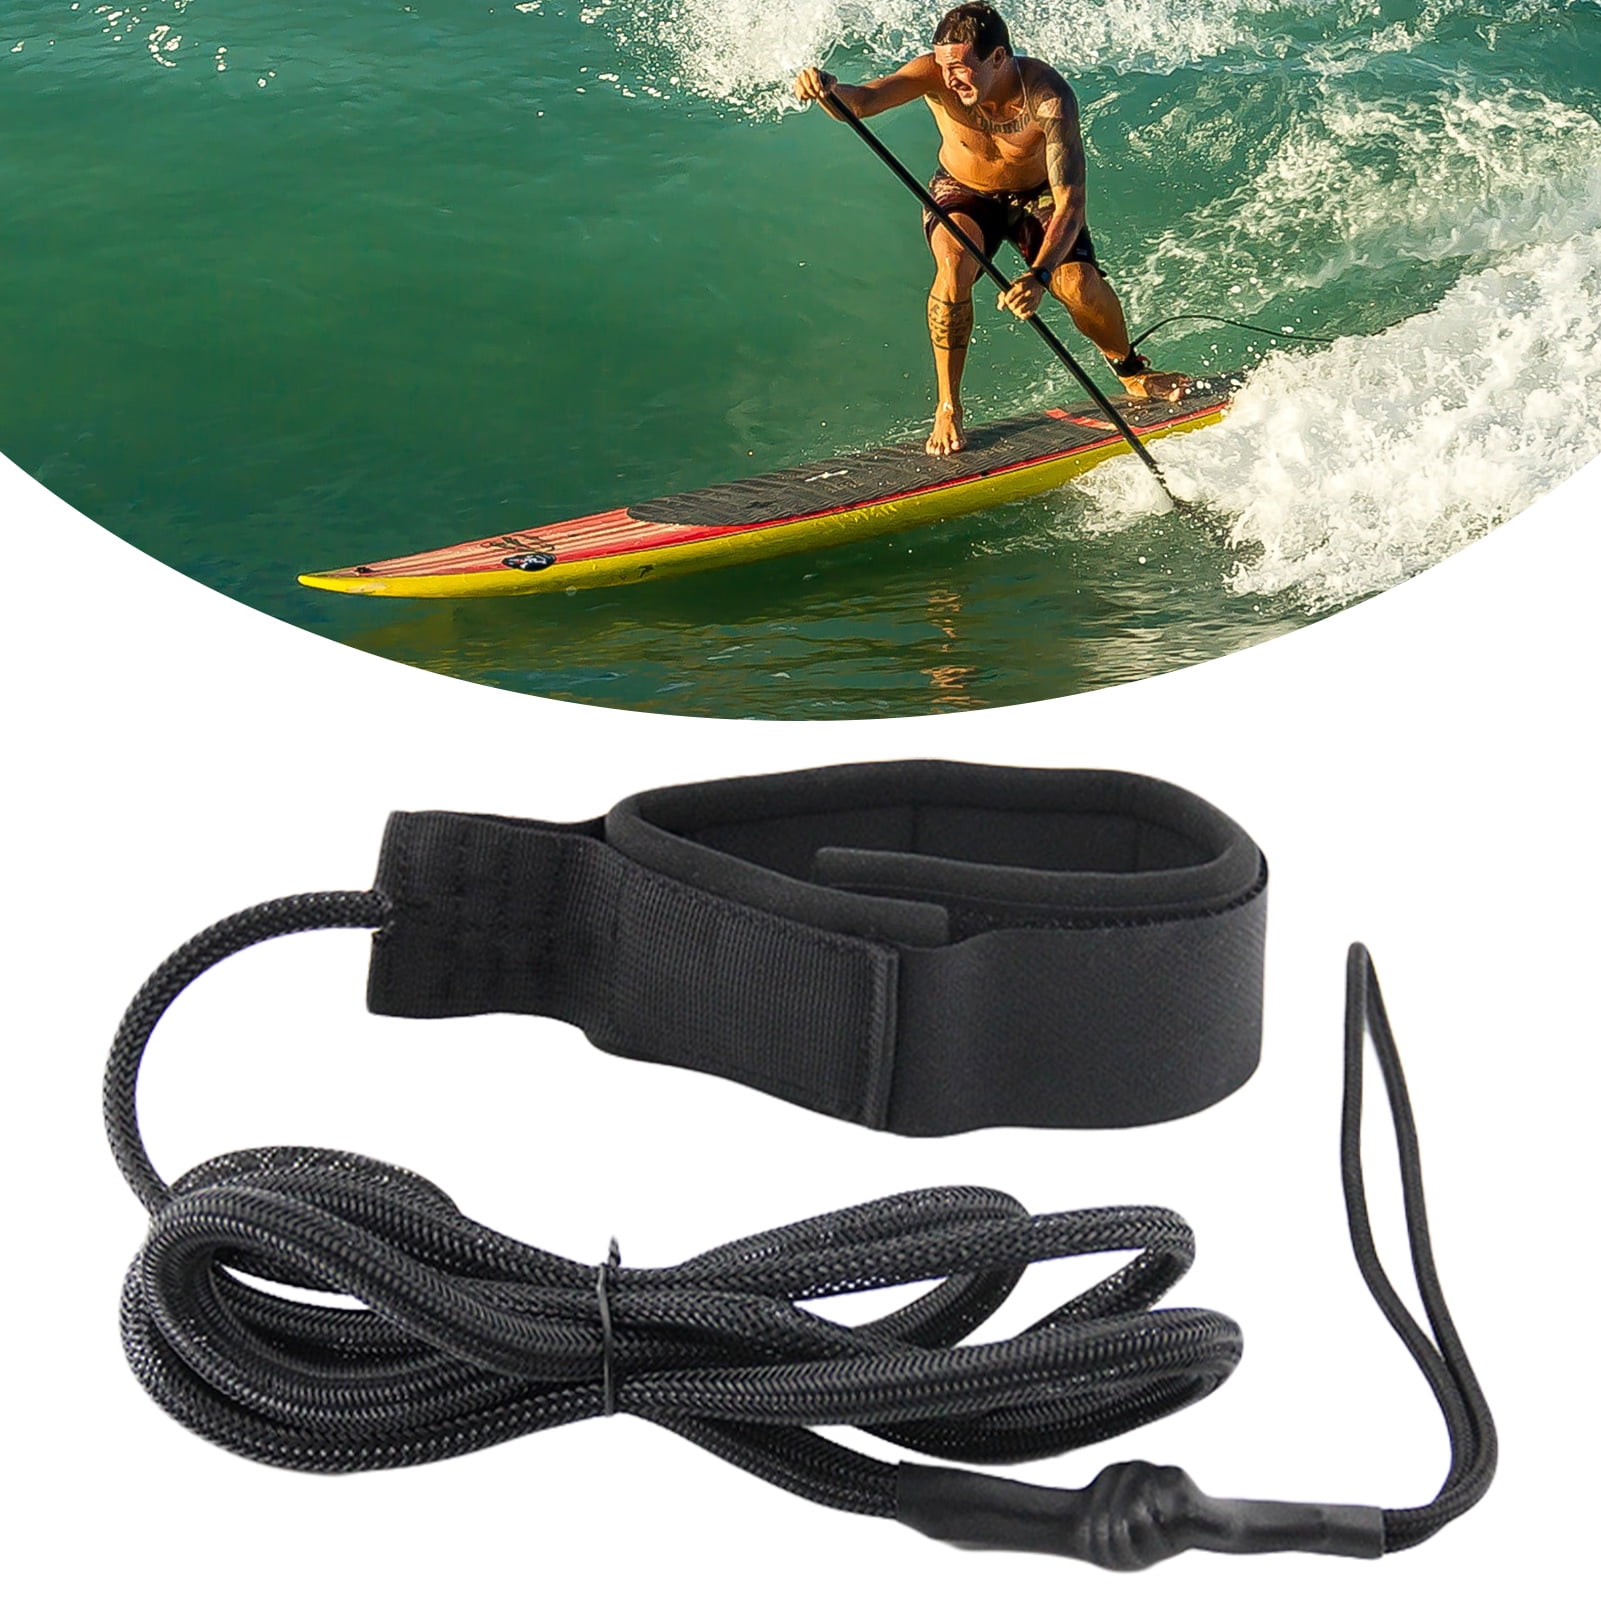 Details about   Surfboard Longboard Board Surfing Water Sport Foam with Removable Fins Red 